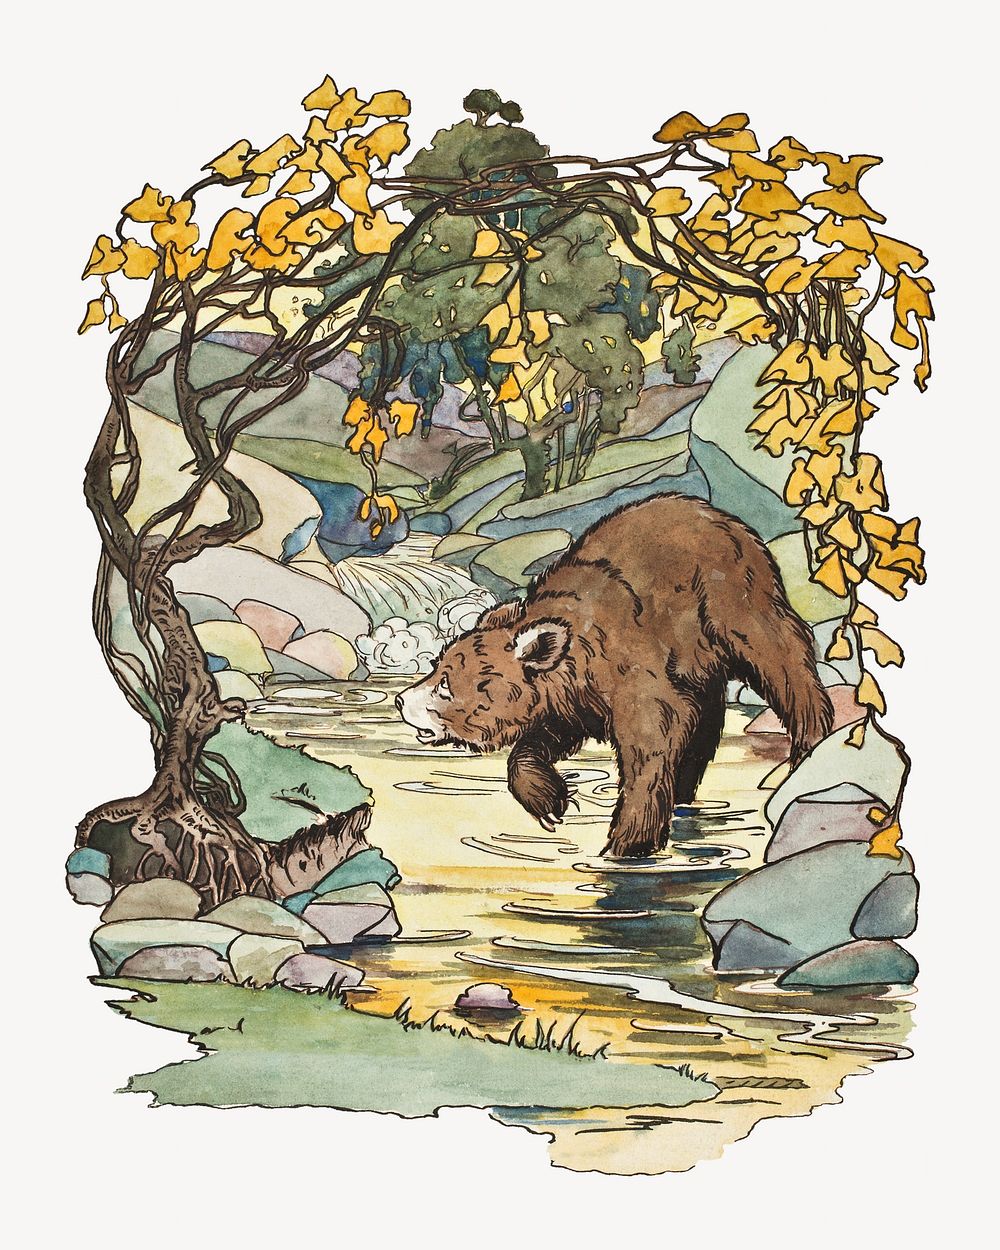 Vintage bear illustration. Remixed by rawpixel.